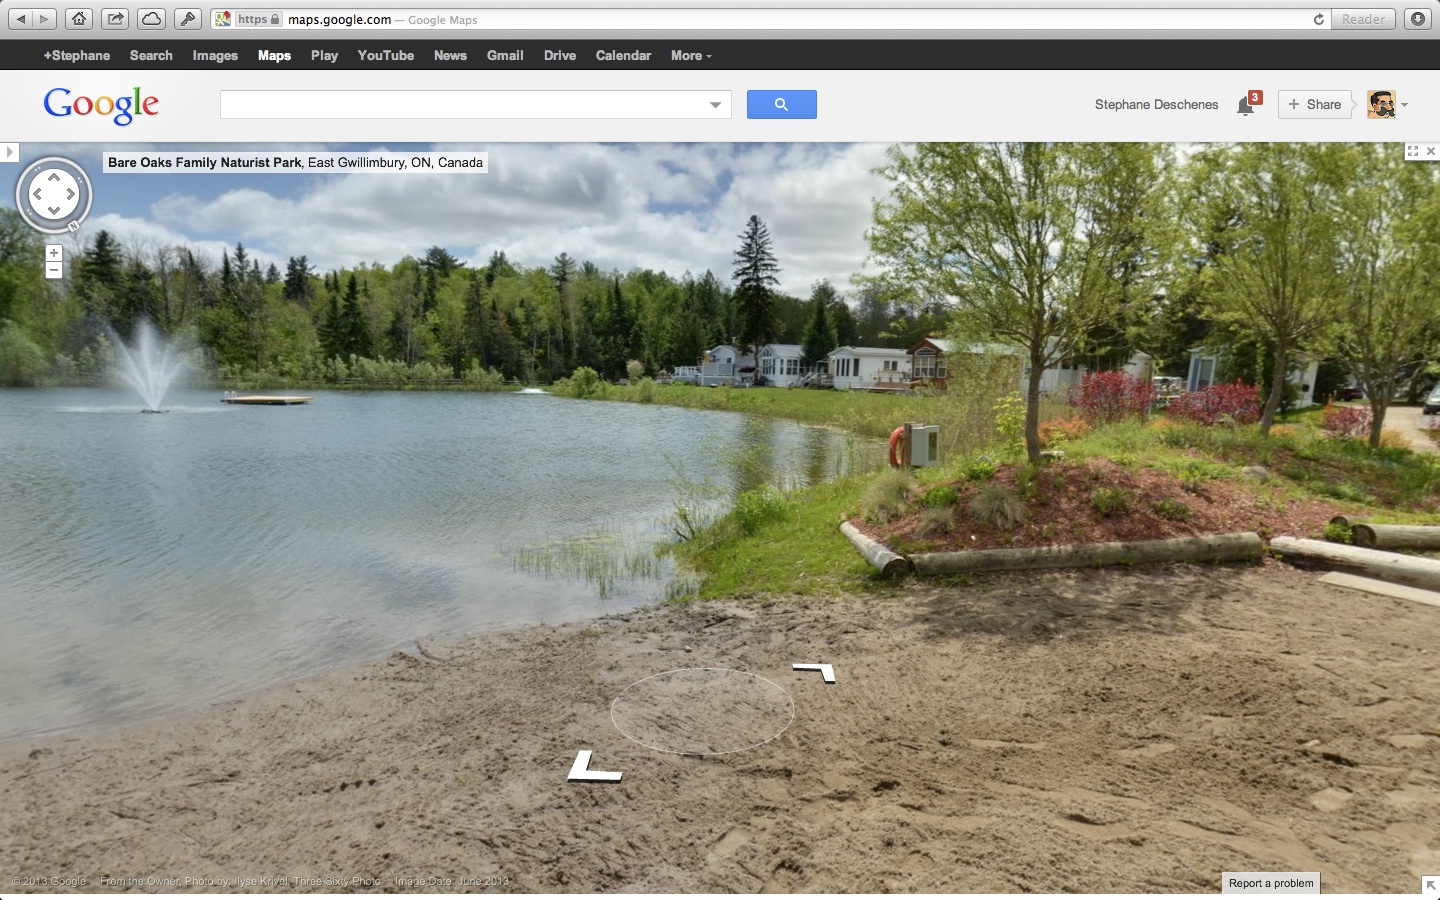 Google Streetview tour of Bare Oaks Family Naturist Park